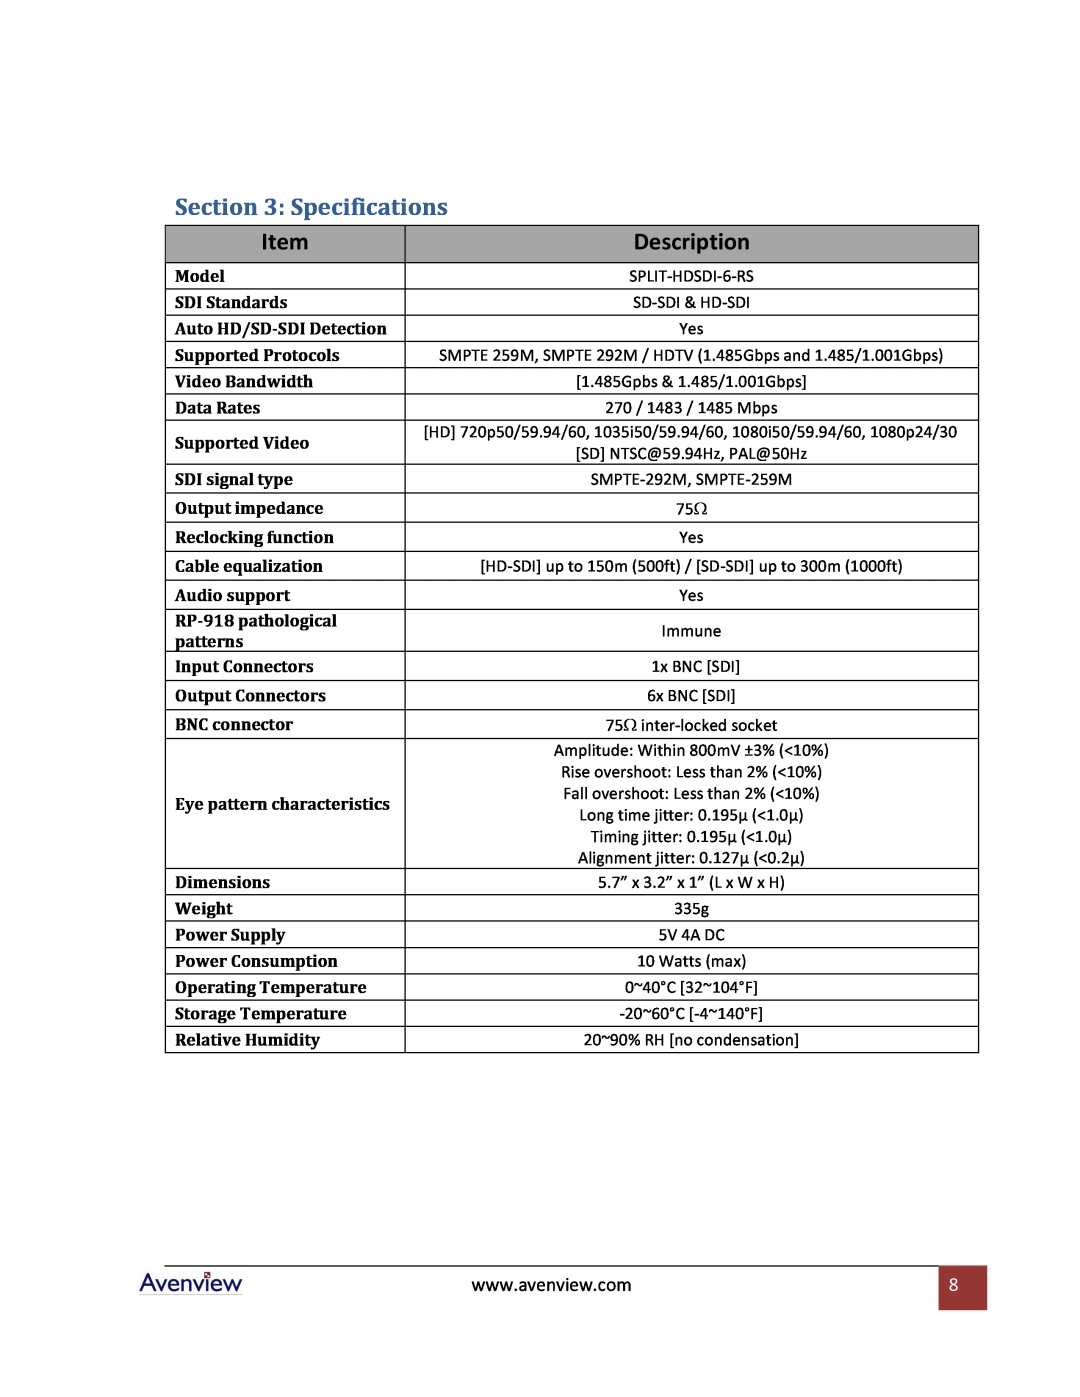 Avenview SPLIT-HDSDI-6-RS specifications Specifications, Description 